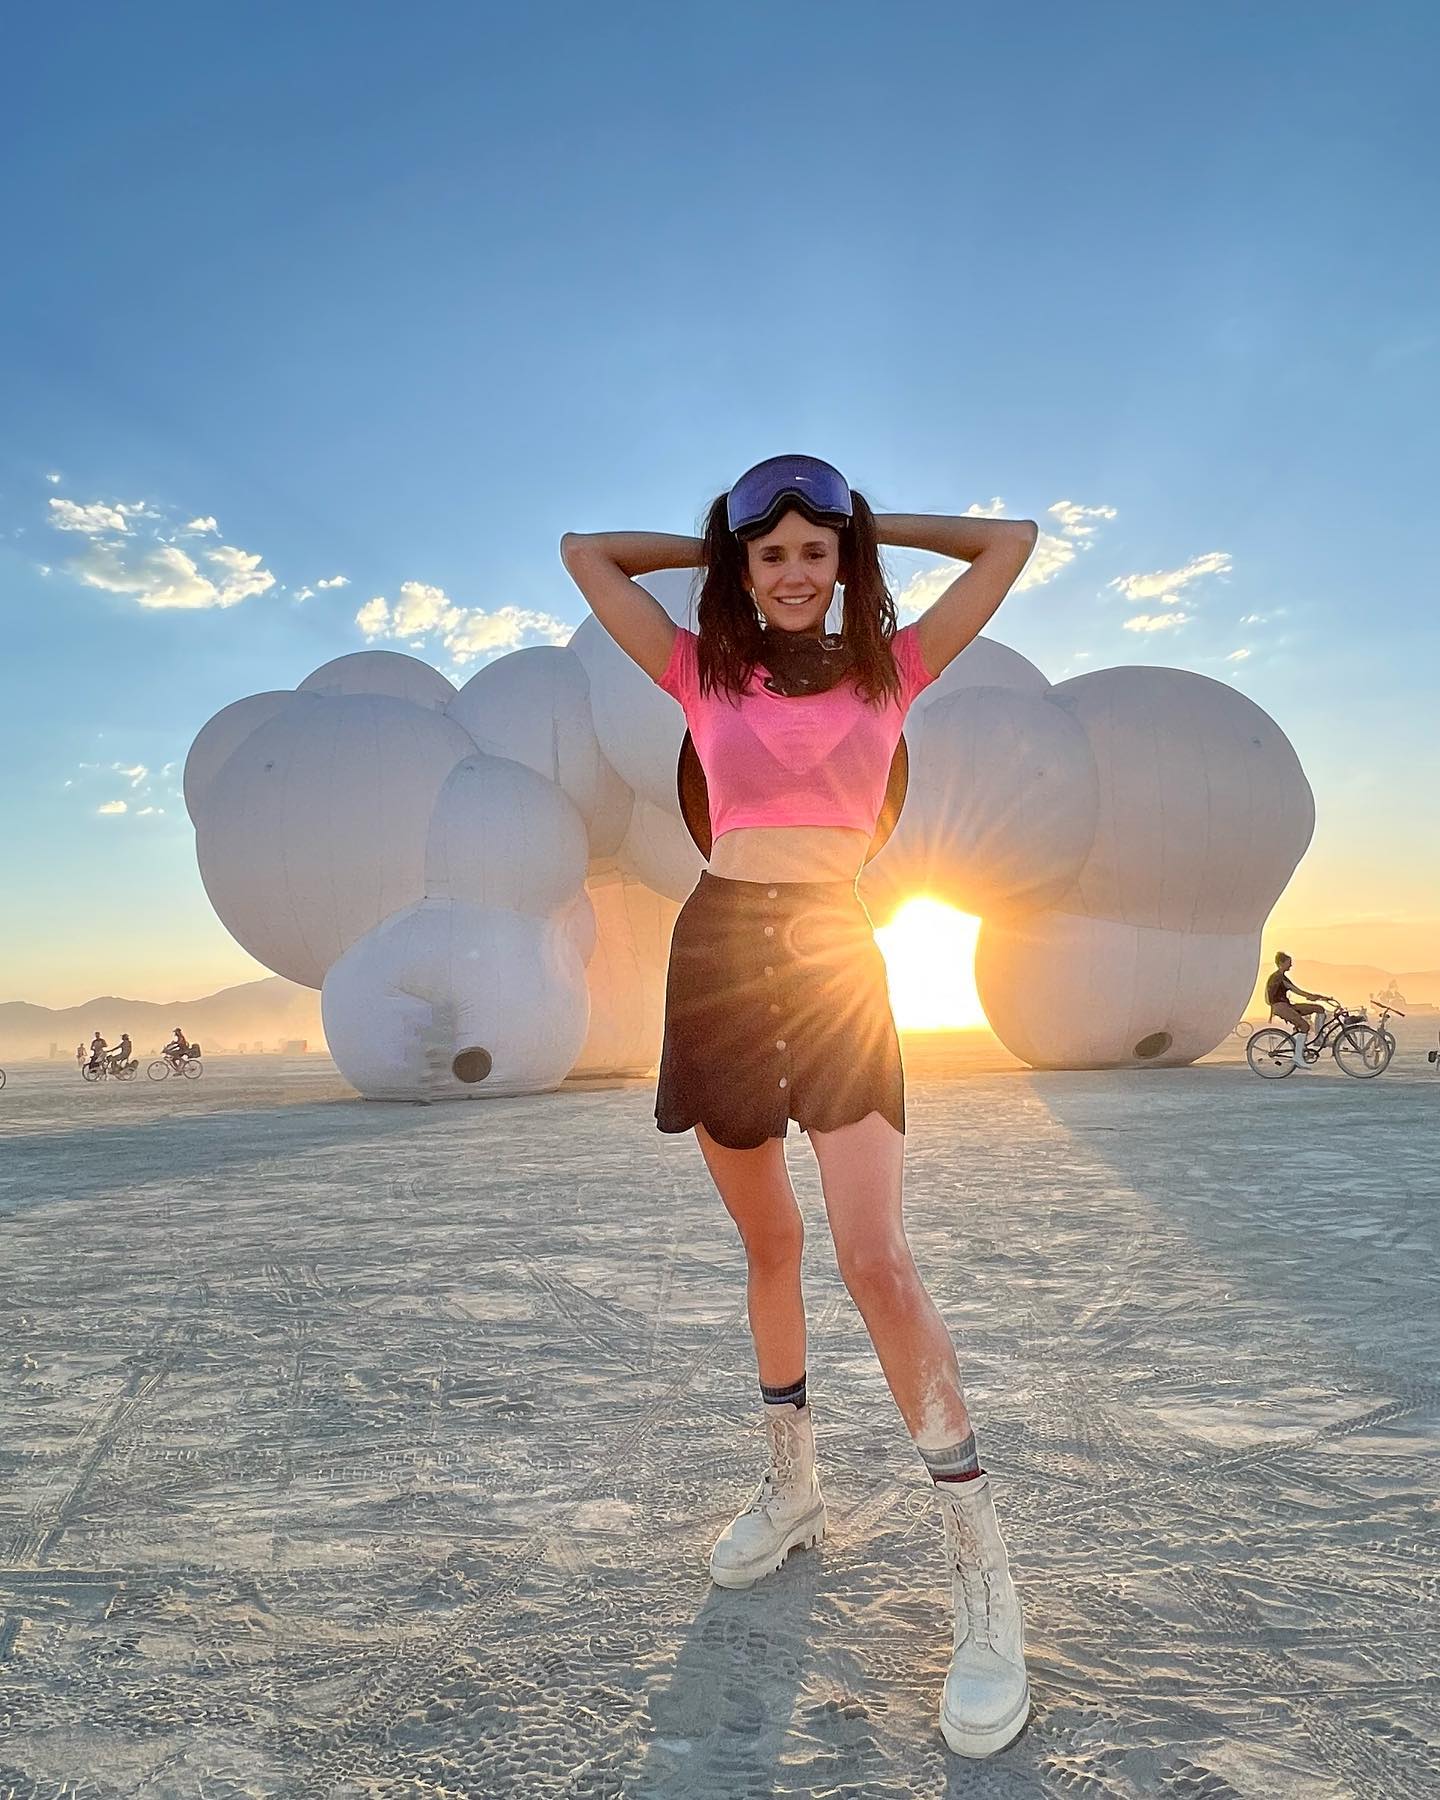 Nina Dobrev Kicks Up the Dust at Burning Man! - Photo 4